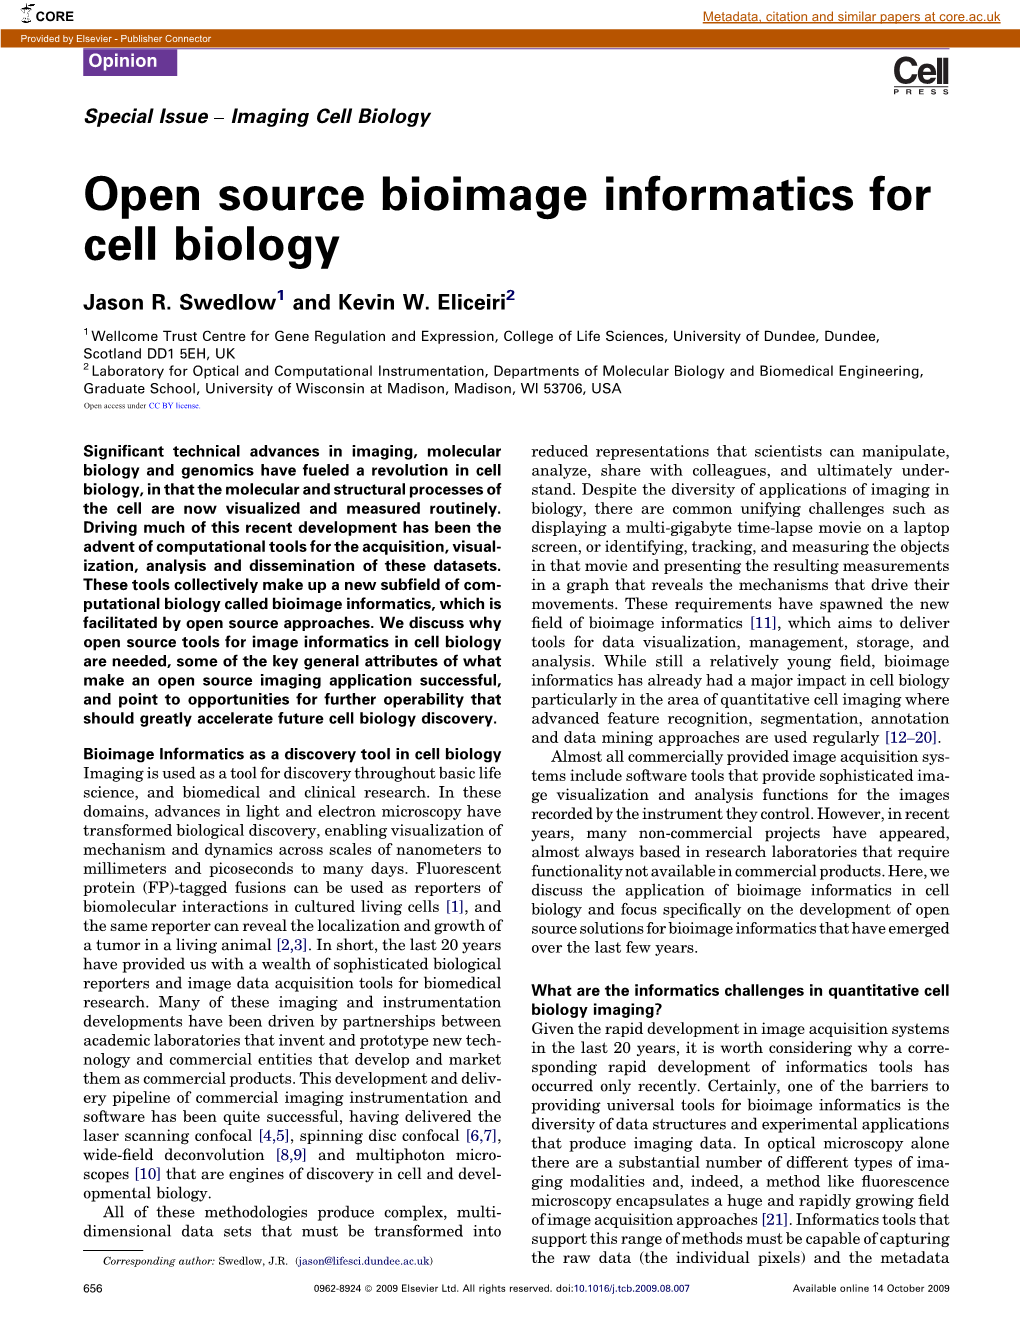 Open Source Bioimage Informatics for Cell Biology